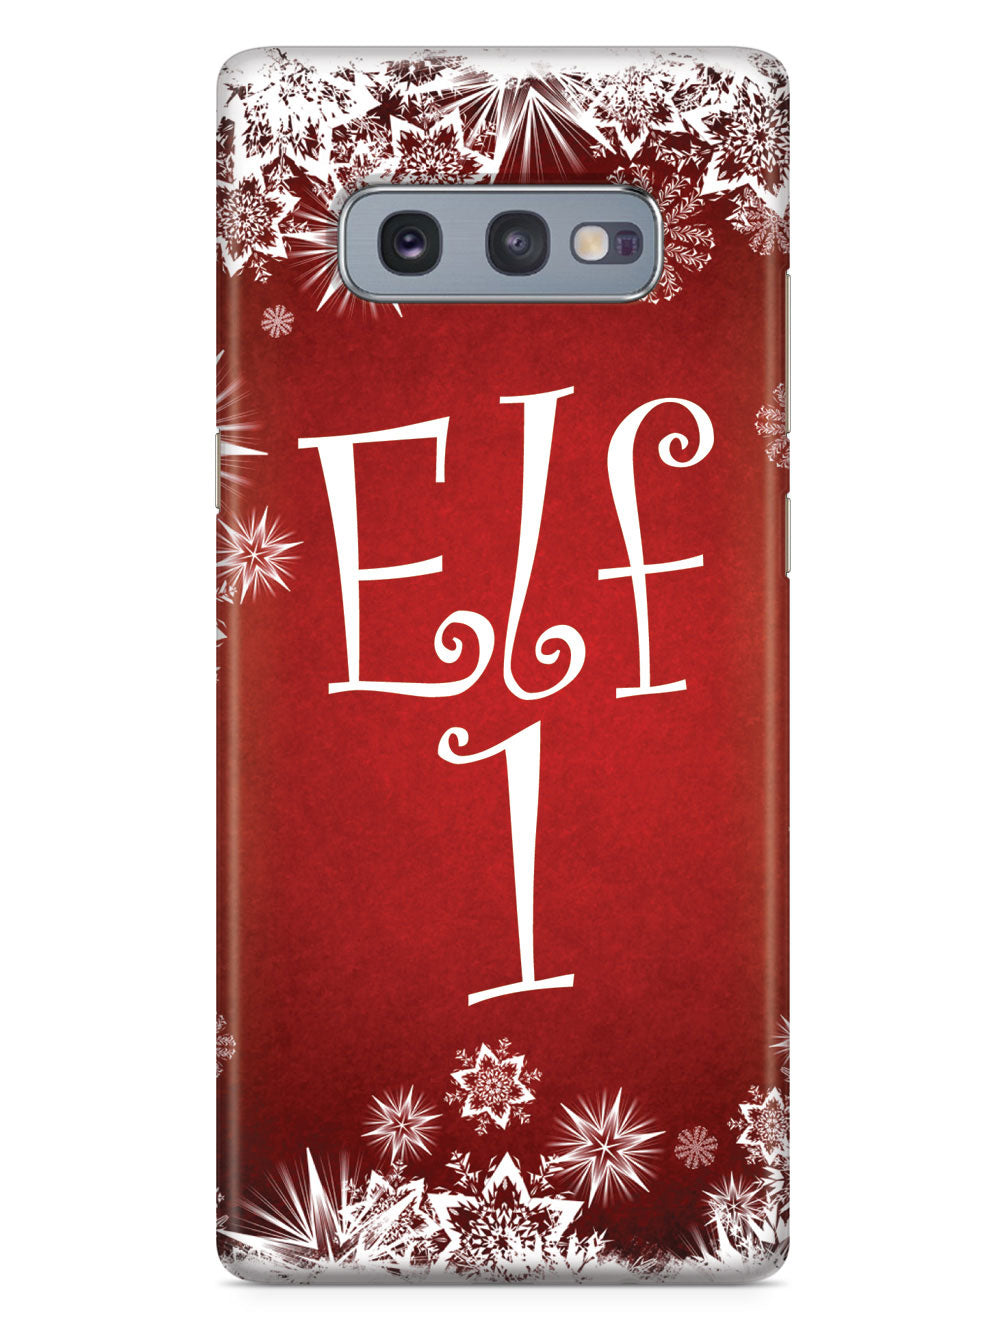 Elf #1 Christmas Case